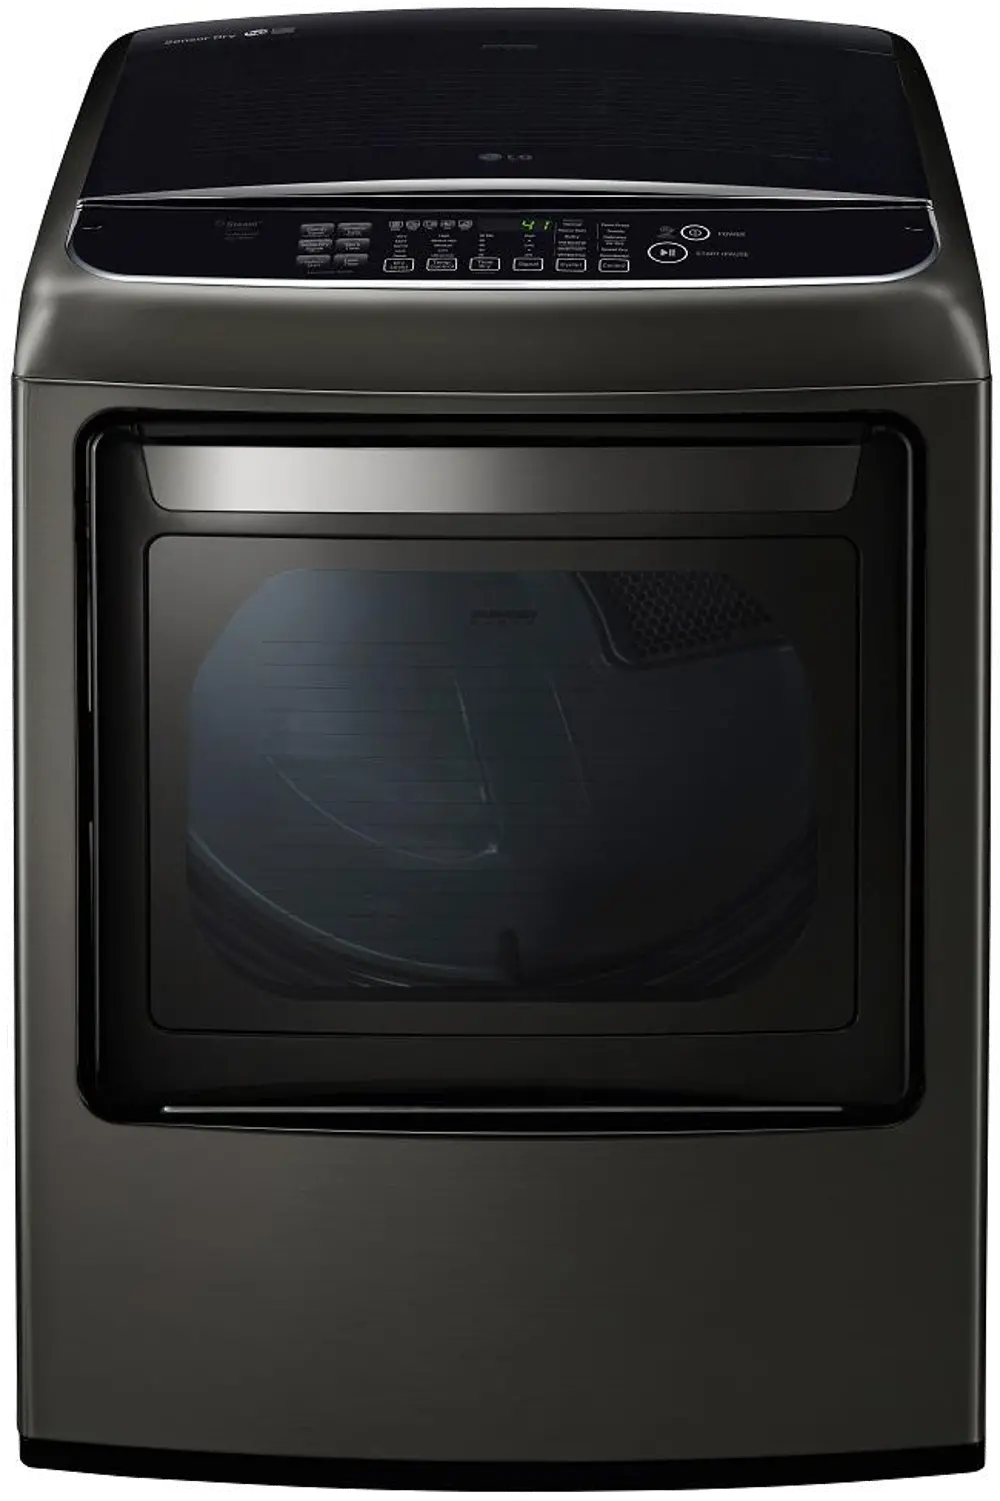 DLEY1901KE LG Front Control Electric Dryer - 7.3 cu. ft. Black Stainless Steel-1